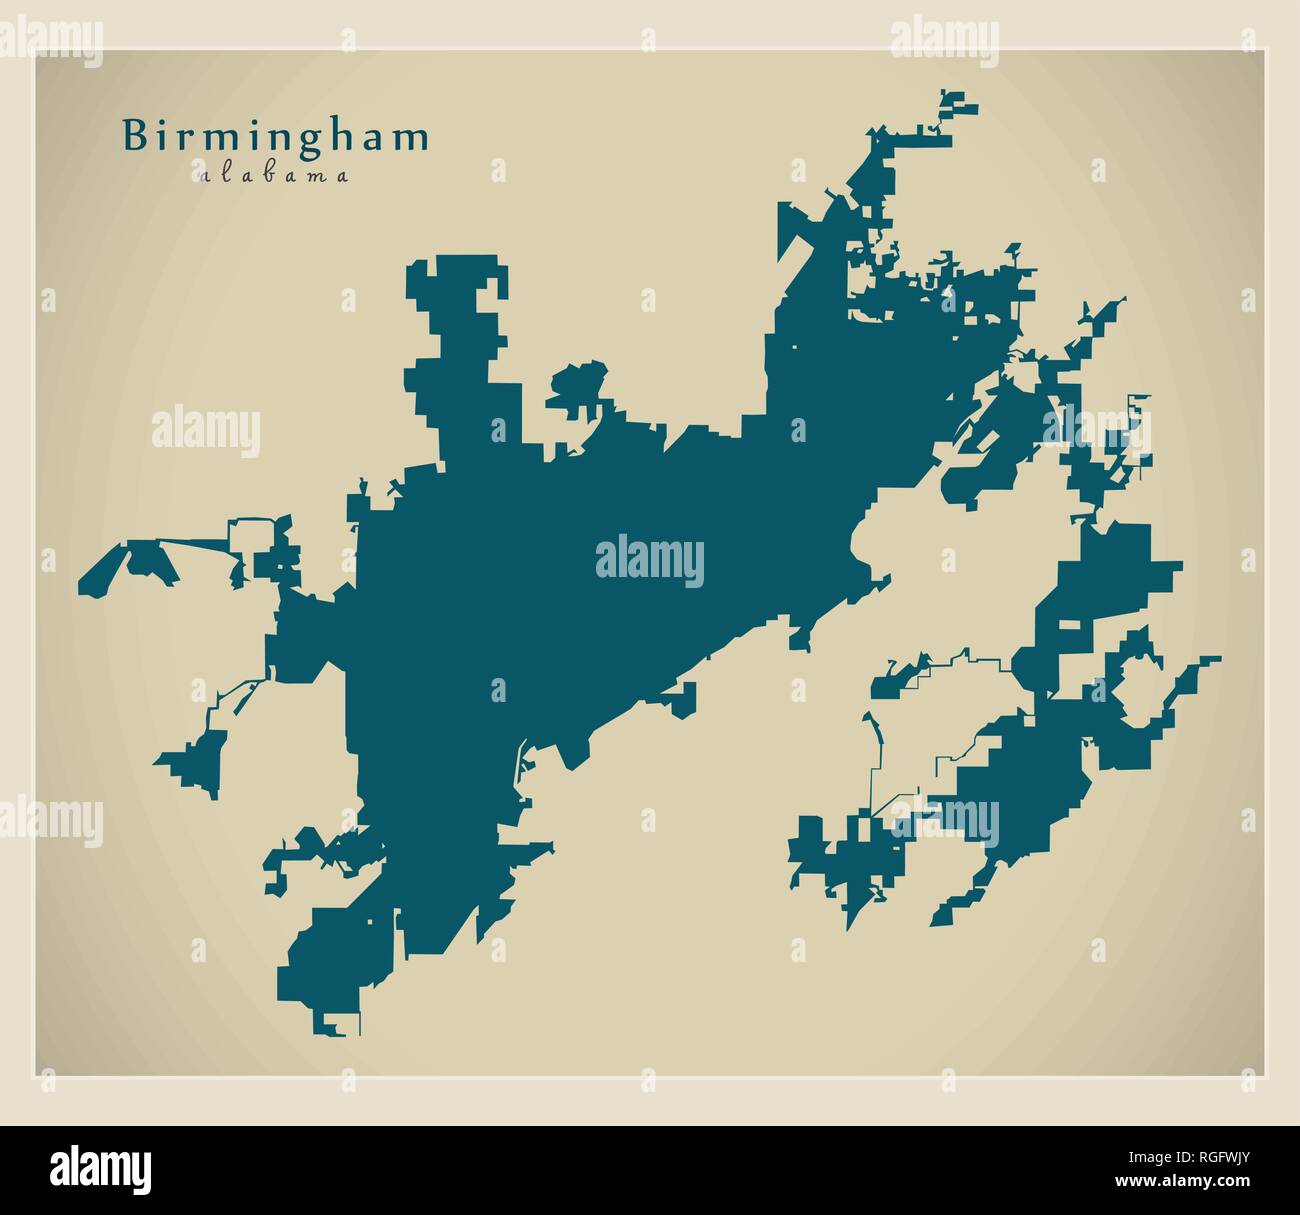 Città moderna mappa - Birmingham Alabama città degli STATI UNITI D'AMERICA Illustrazione Vettoriale